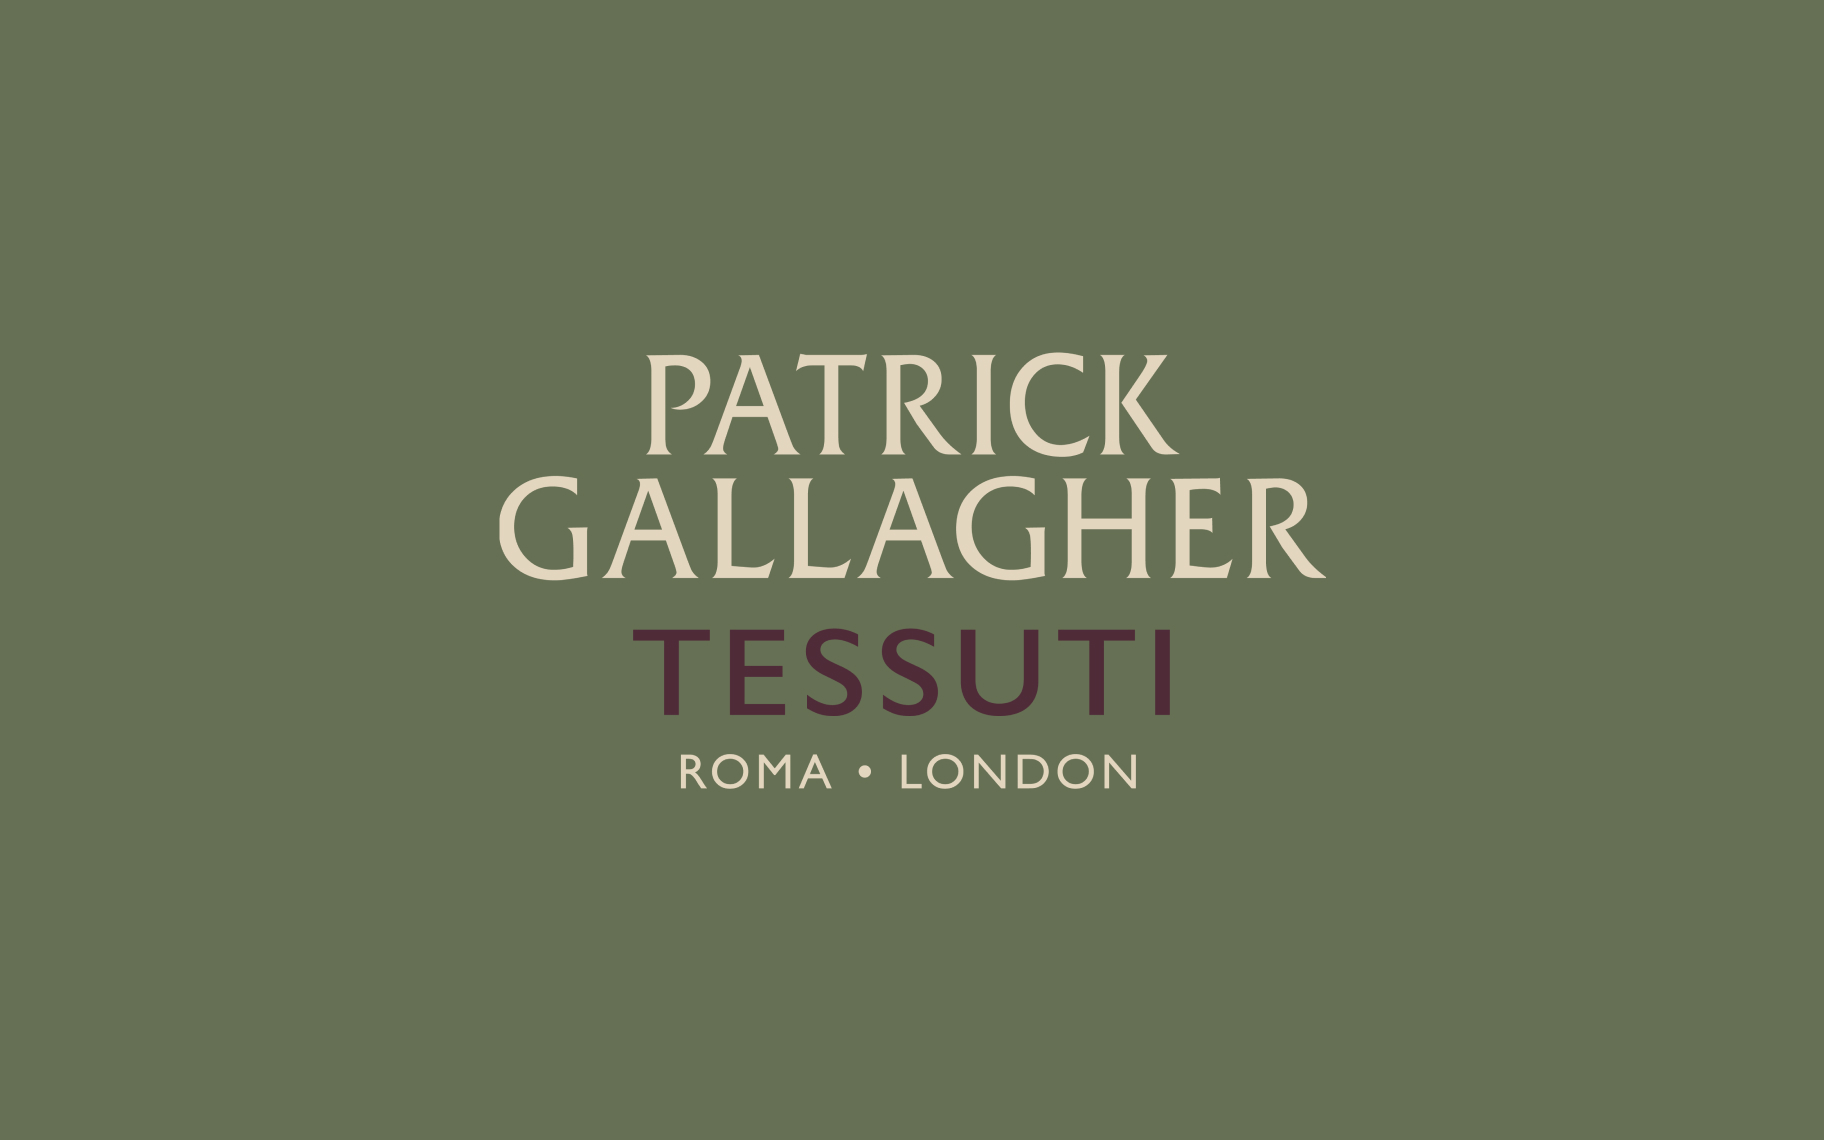 Patrick Gallagher Tessuti Roma - London